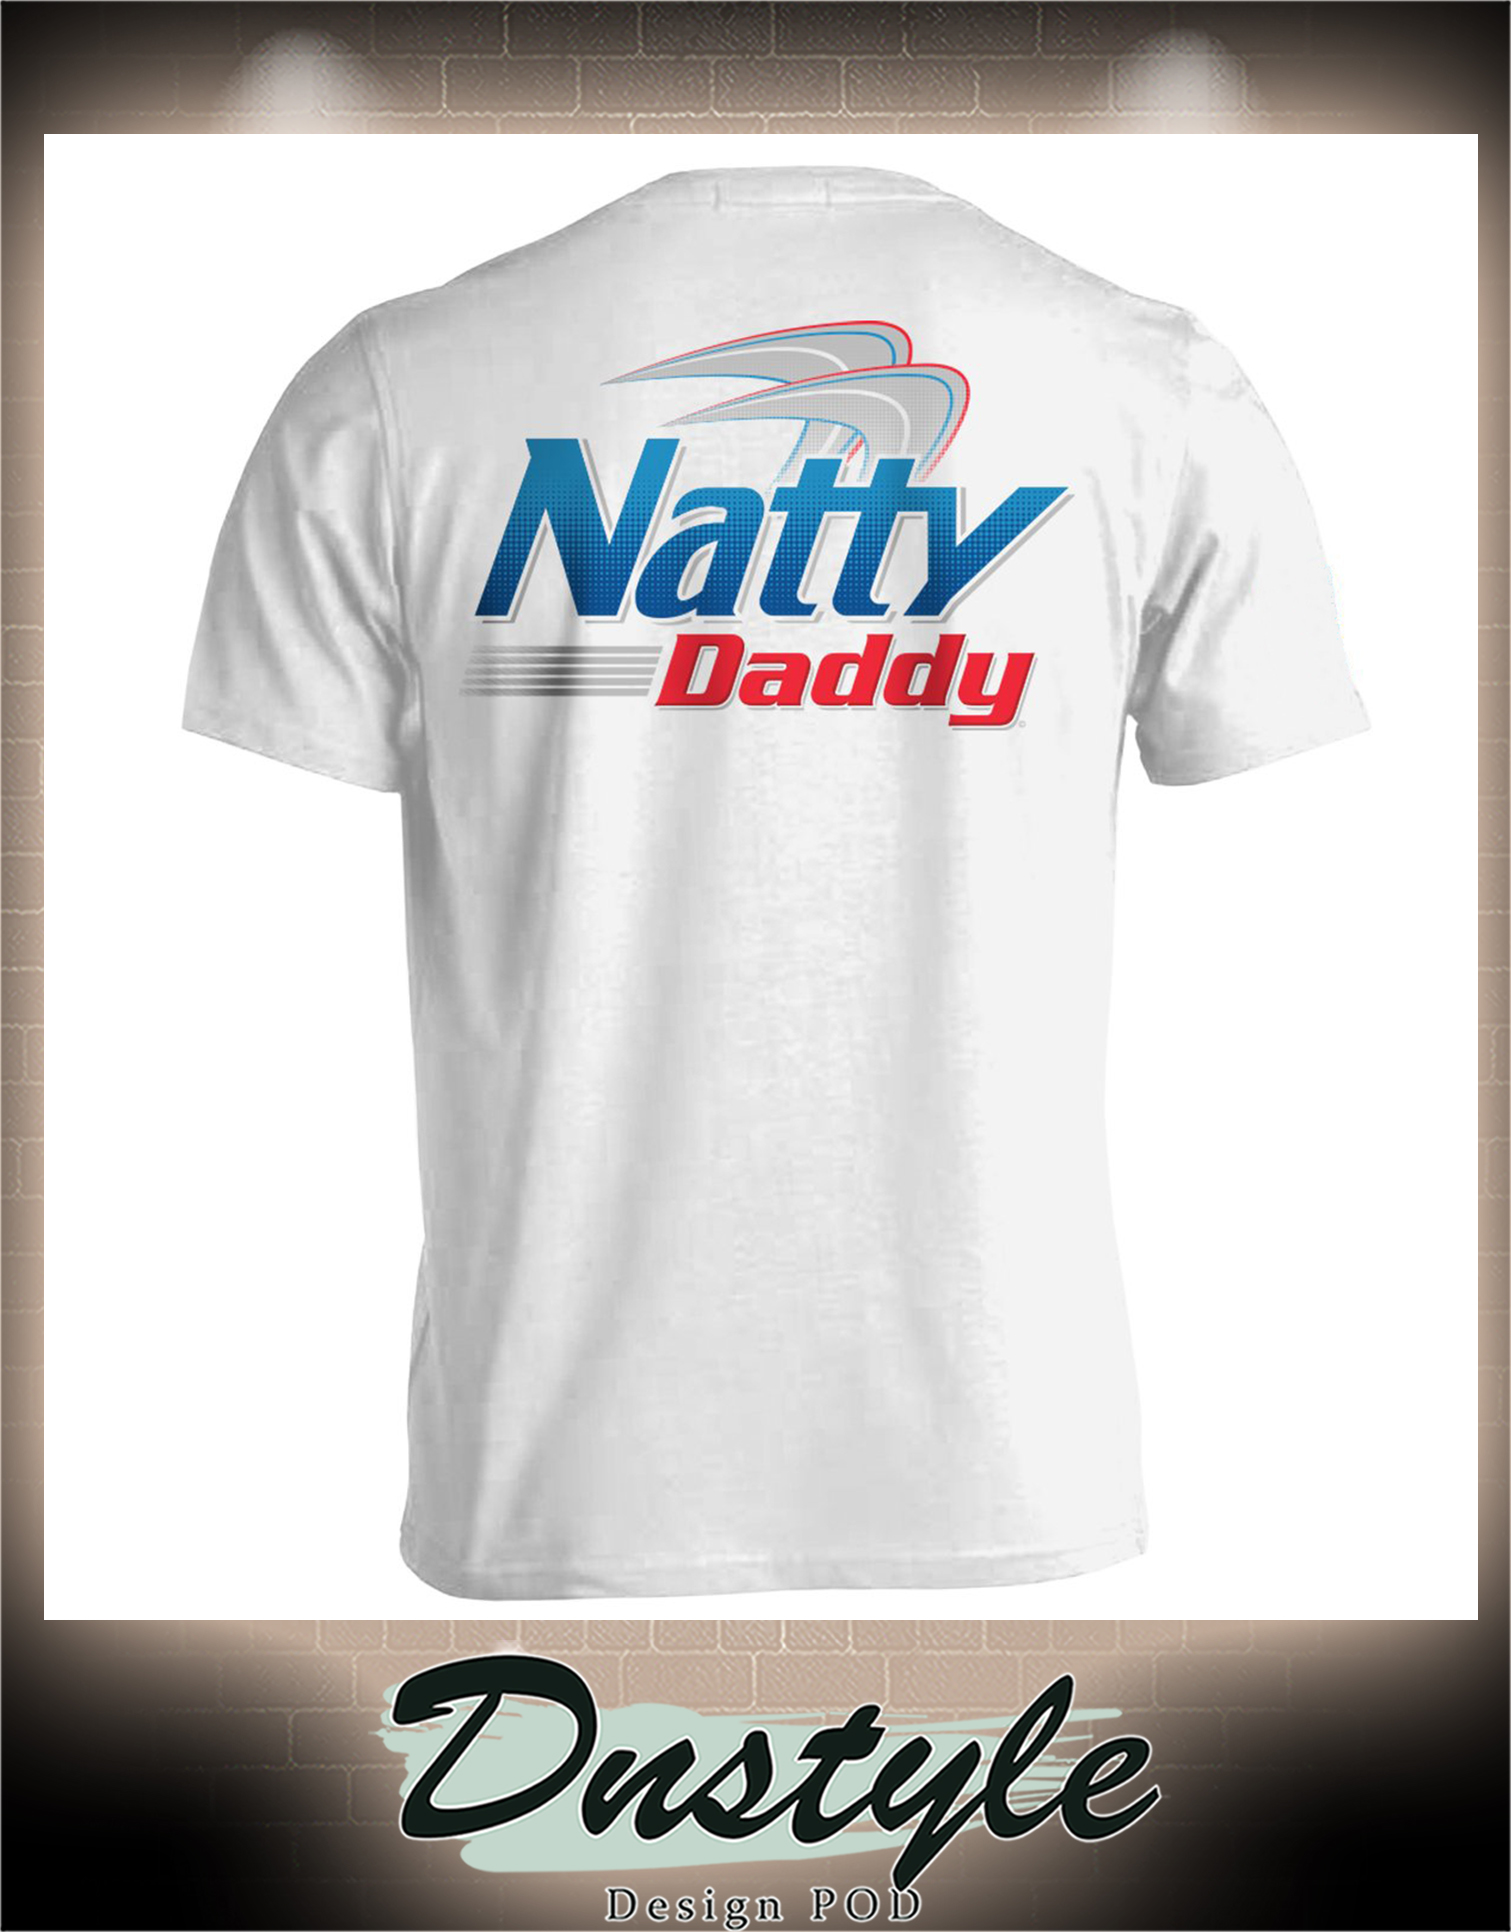 Natural light beer Natty daddy shirt